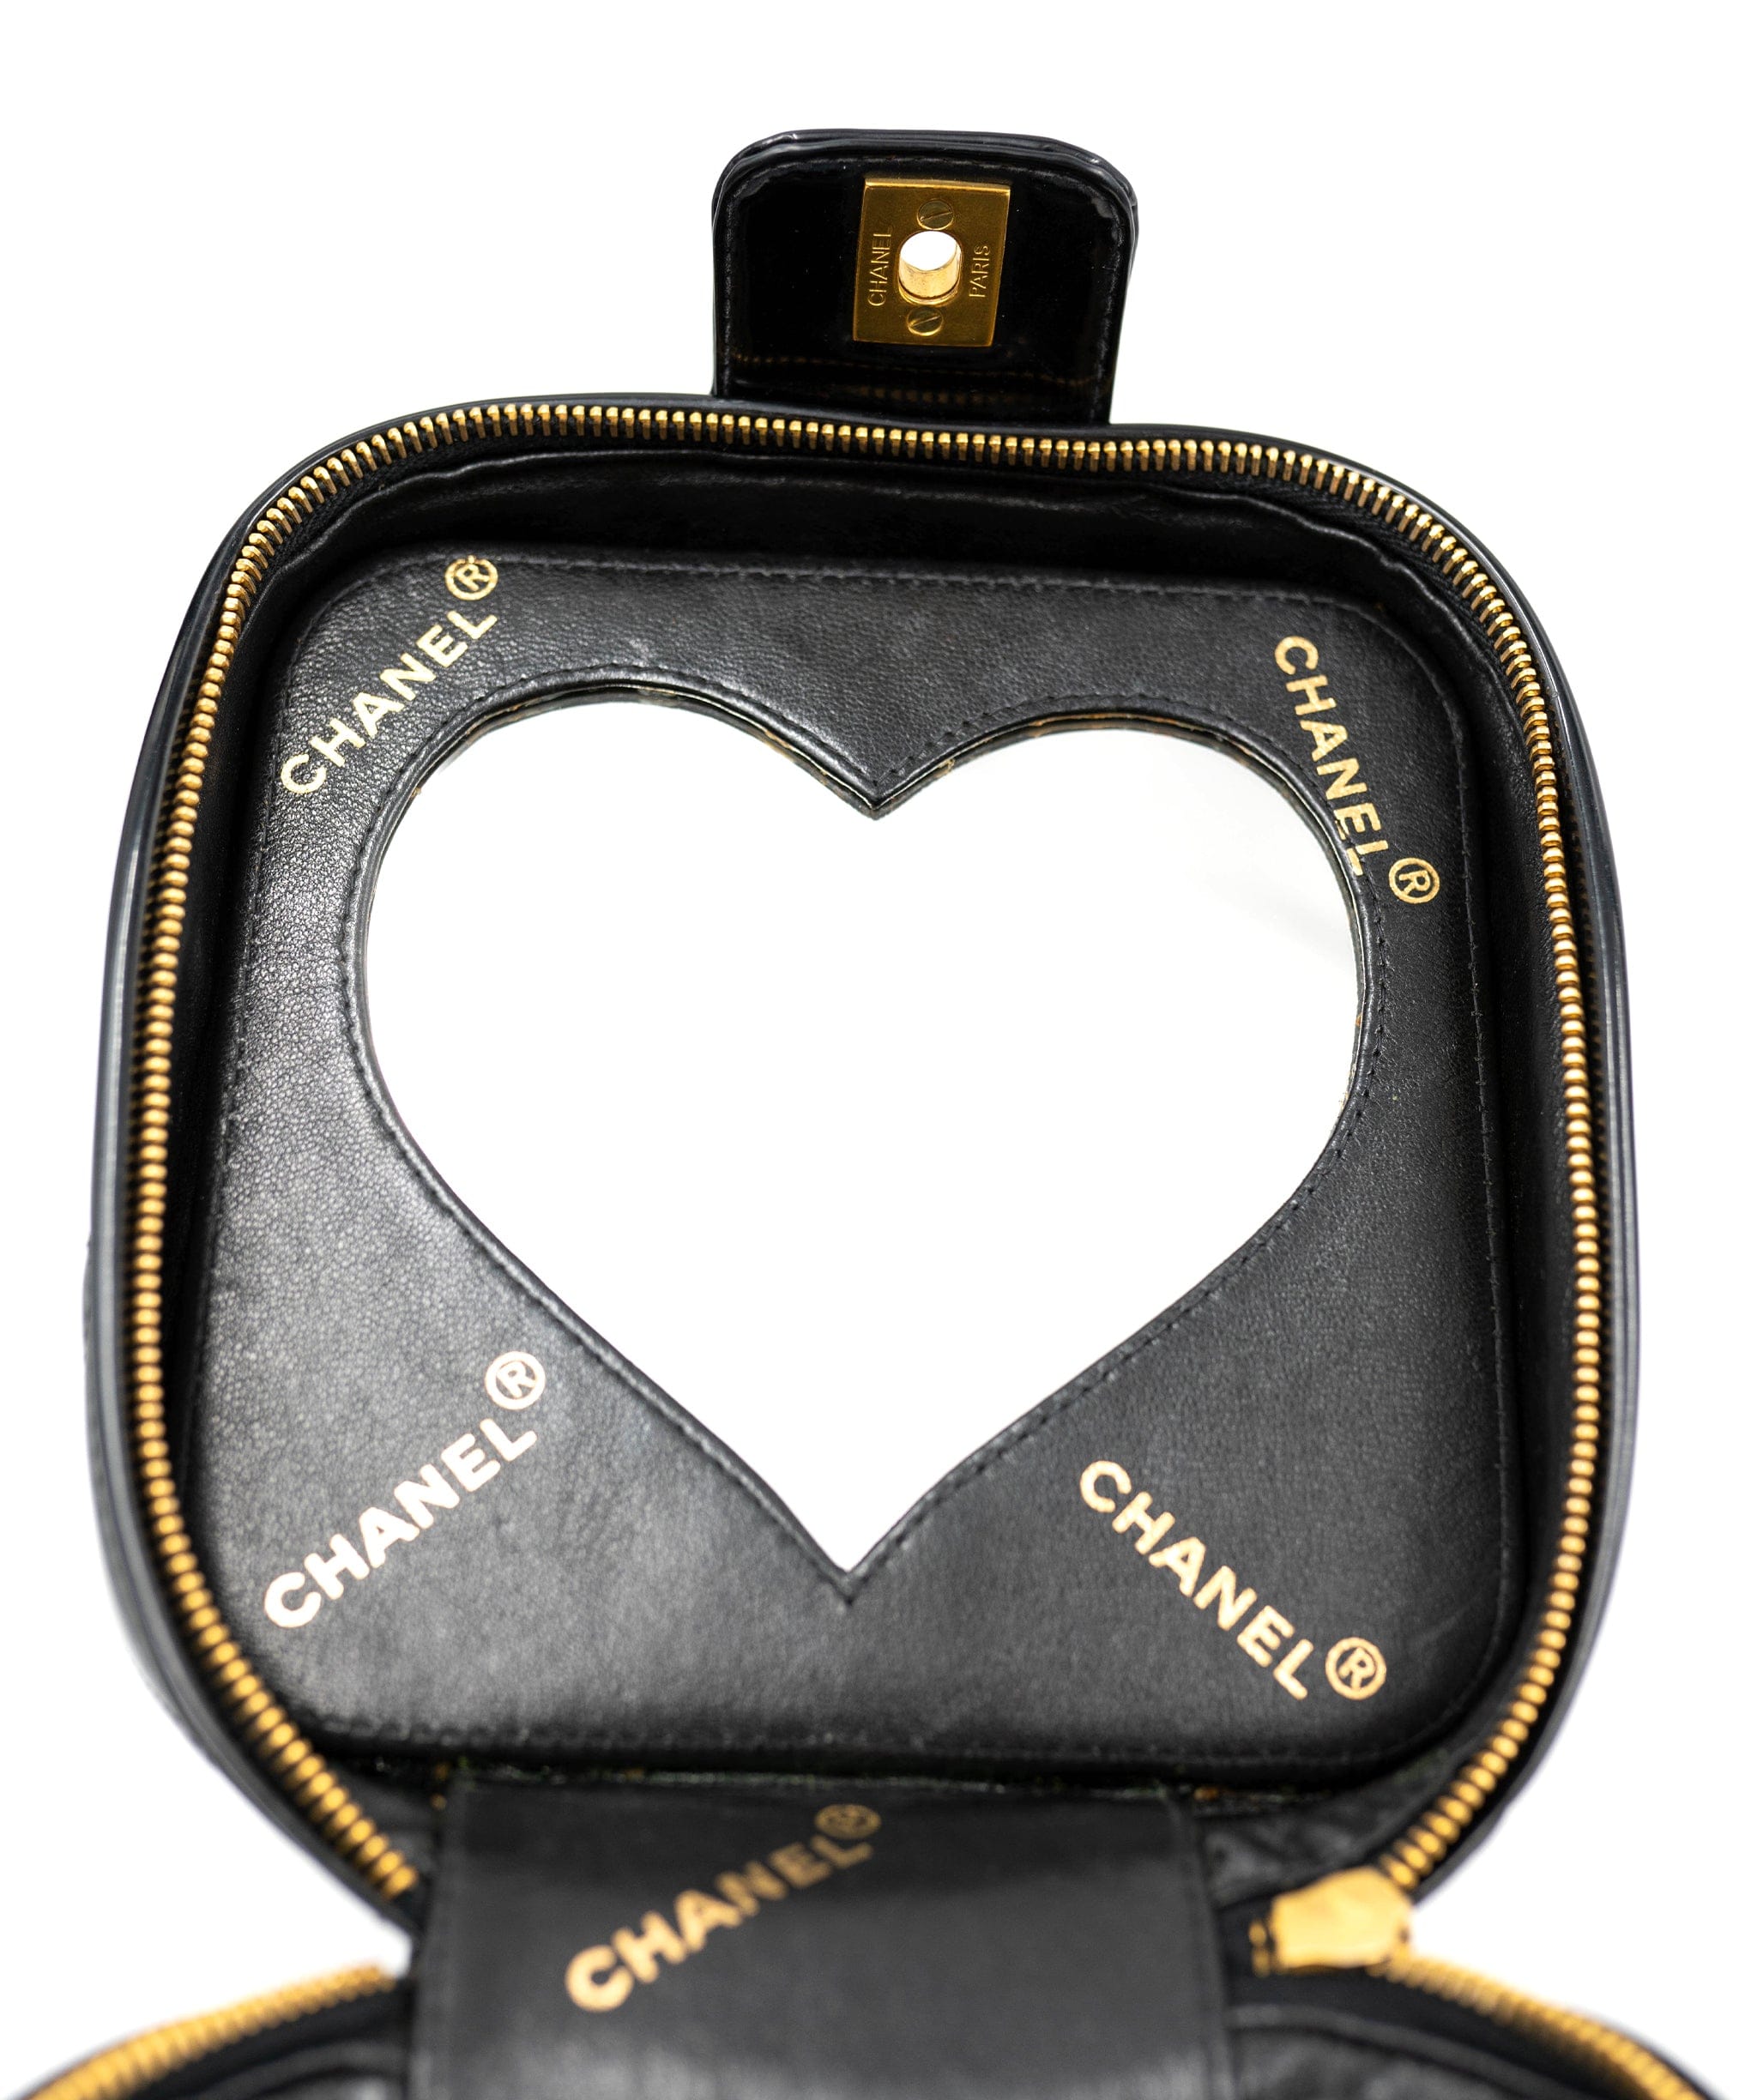 Chanel Chanel black patent leather GHW vanity bag ASL1048